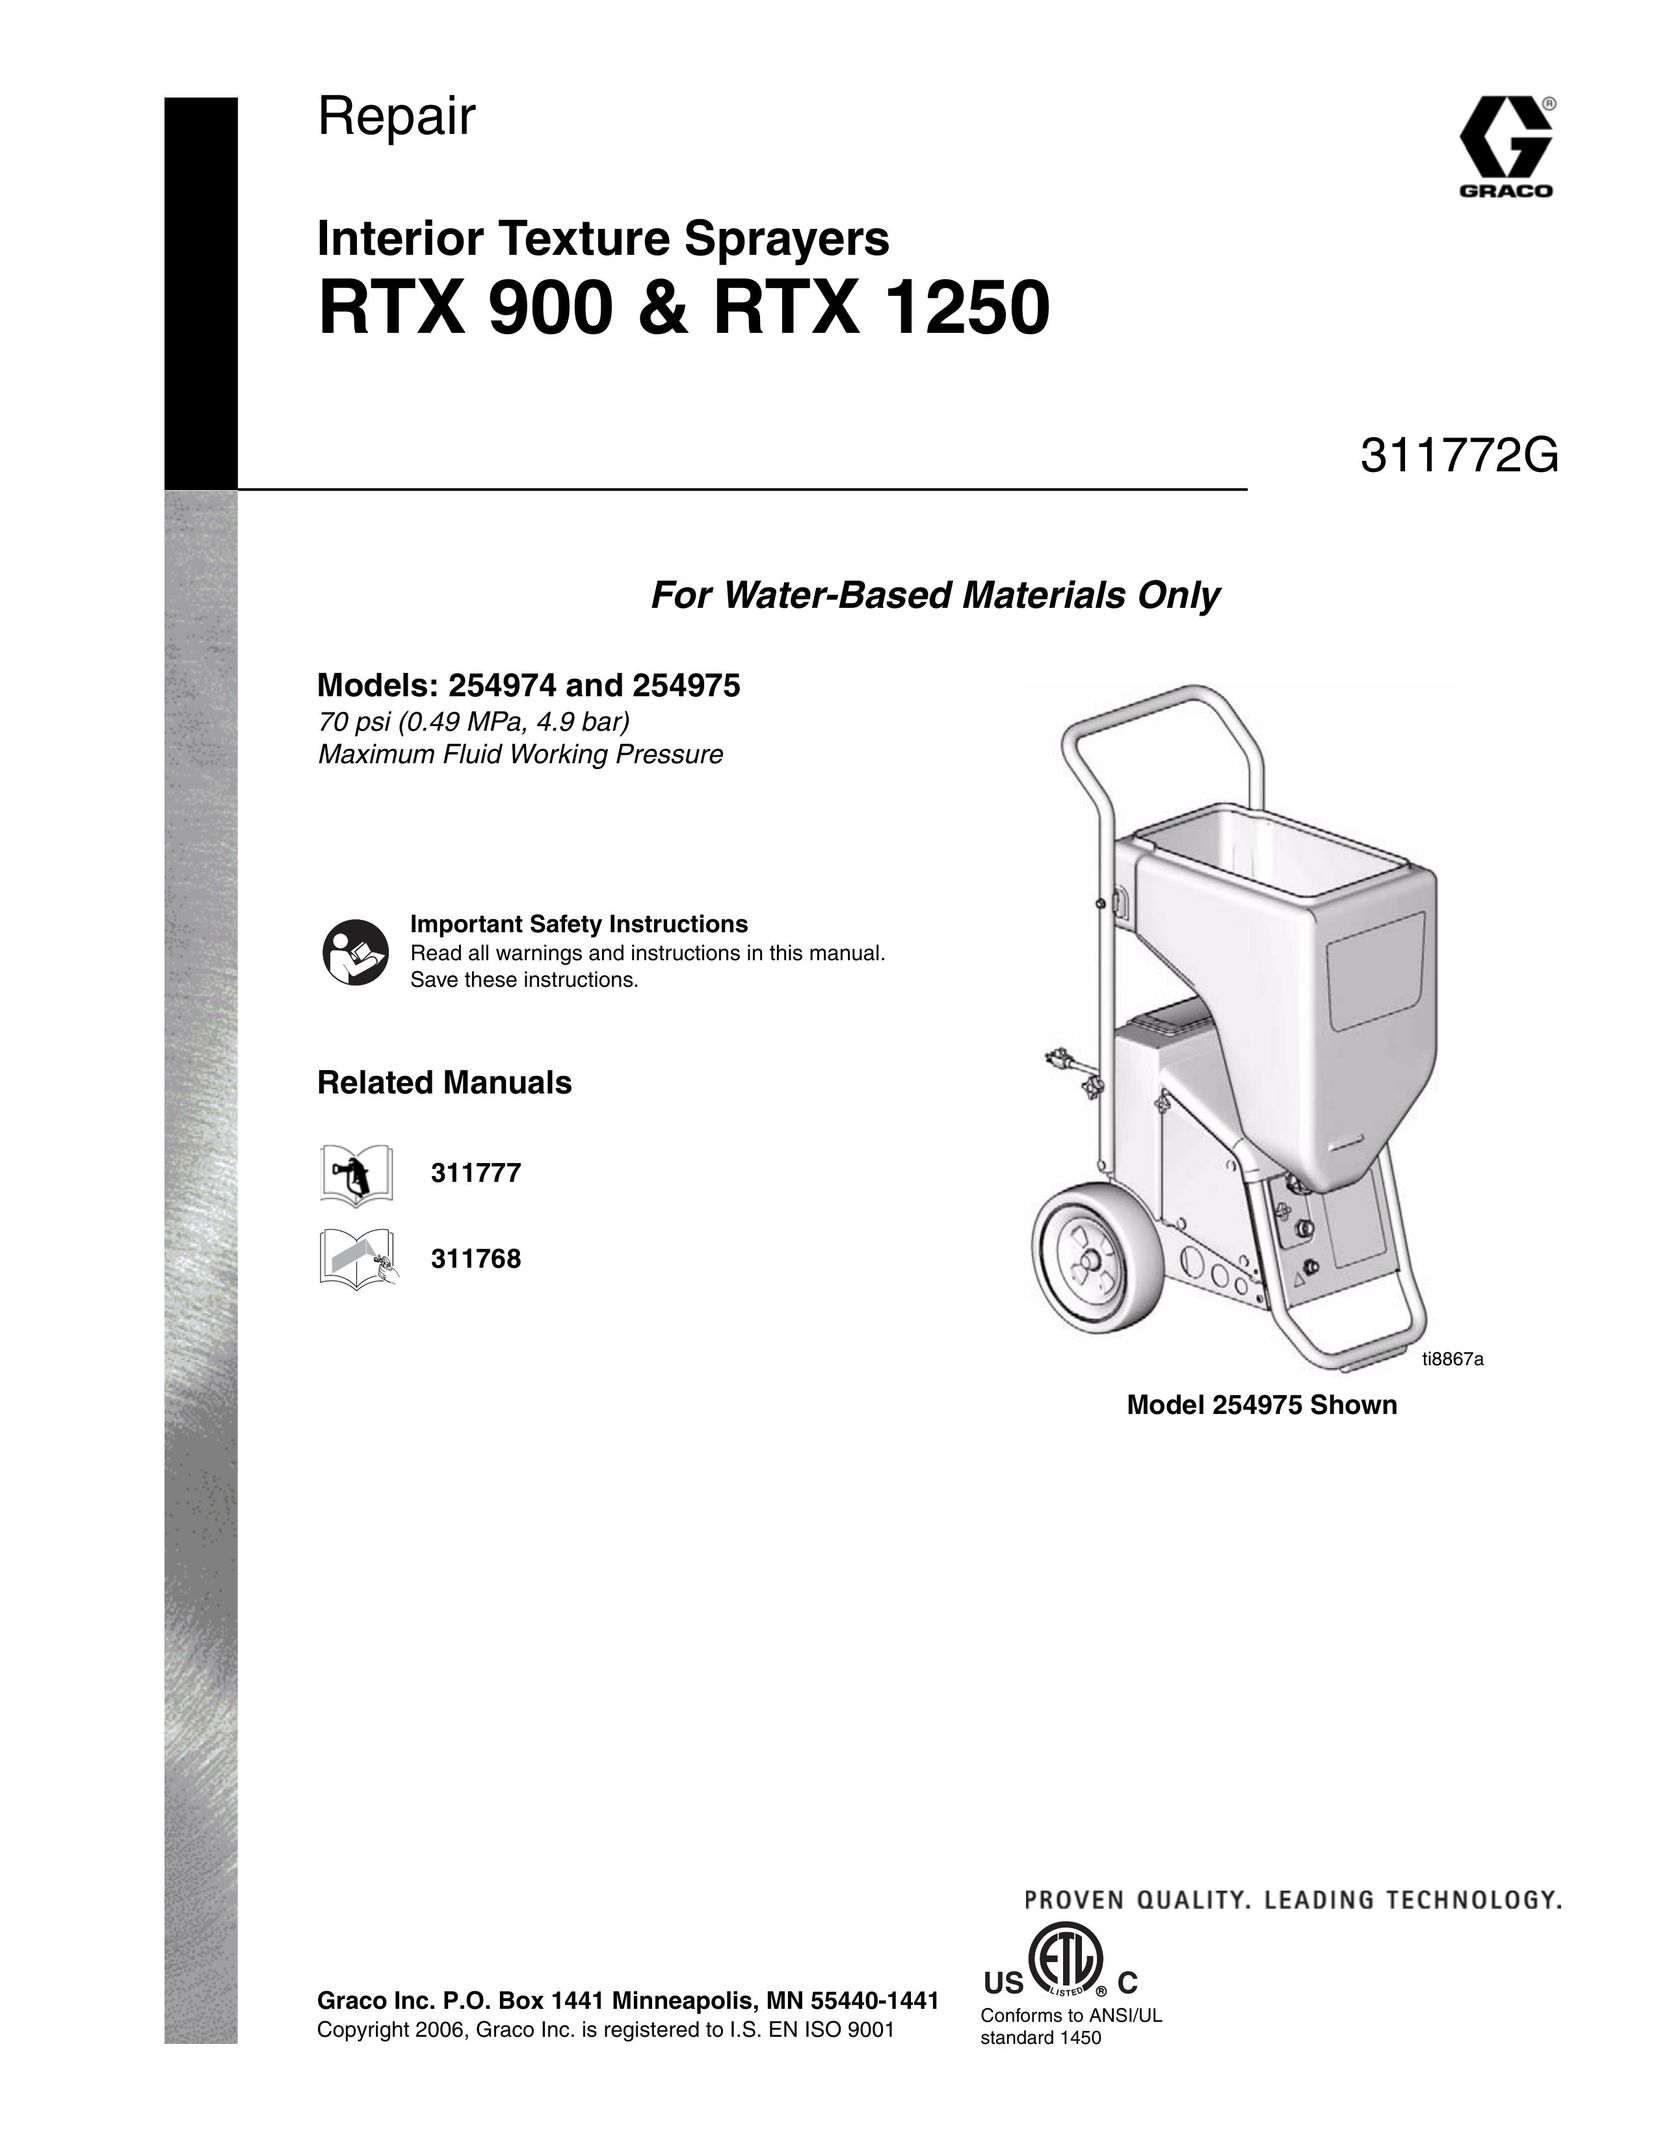 Hitachi RTX 900 Paint Sprayer User Manual